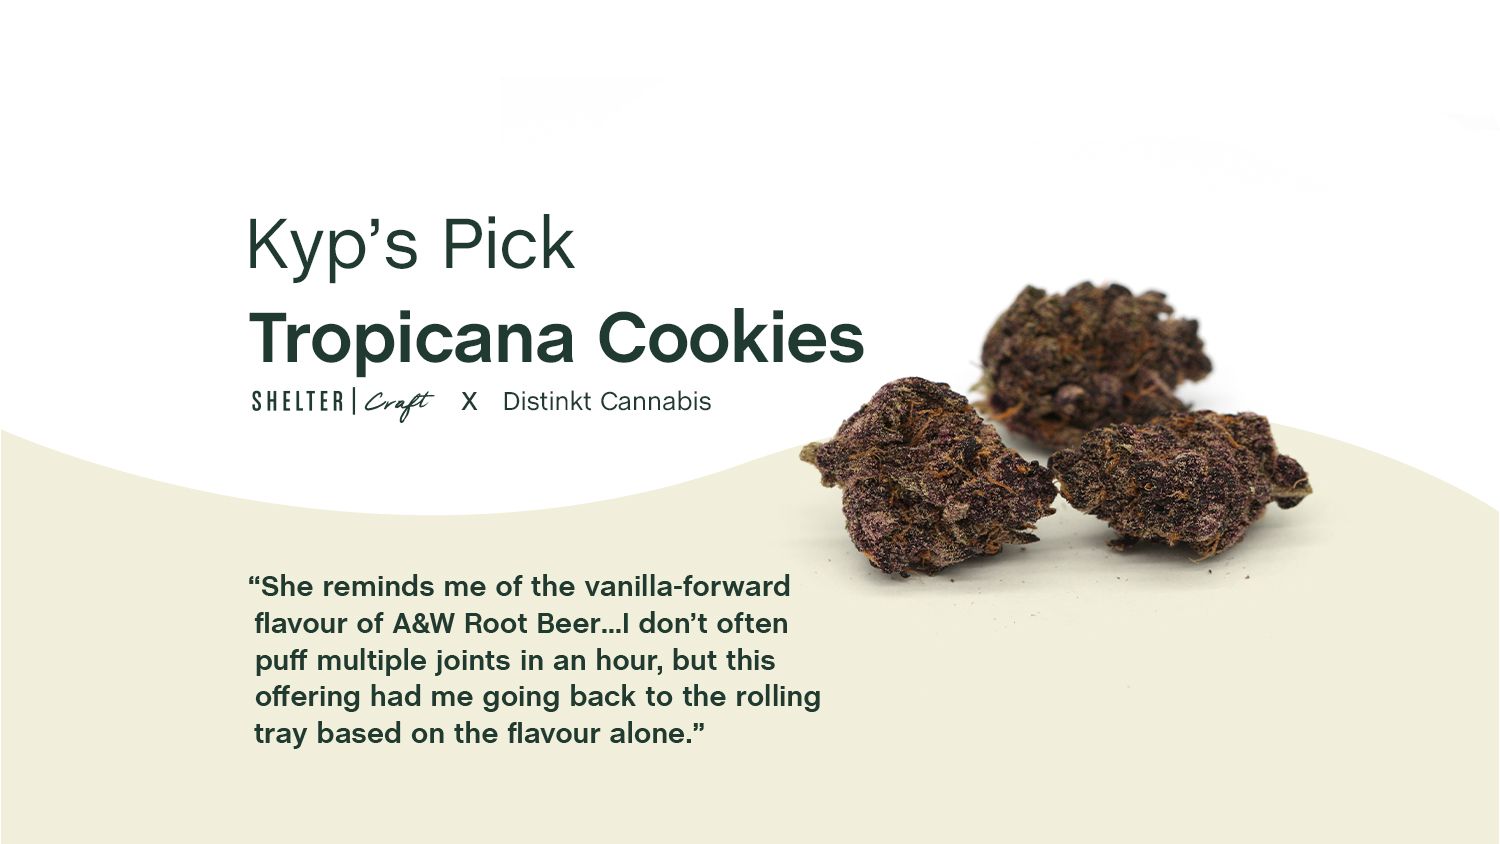 Kyp's Pick: Shelter Craft Distinkt Tropicana Cookies